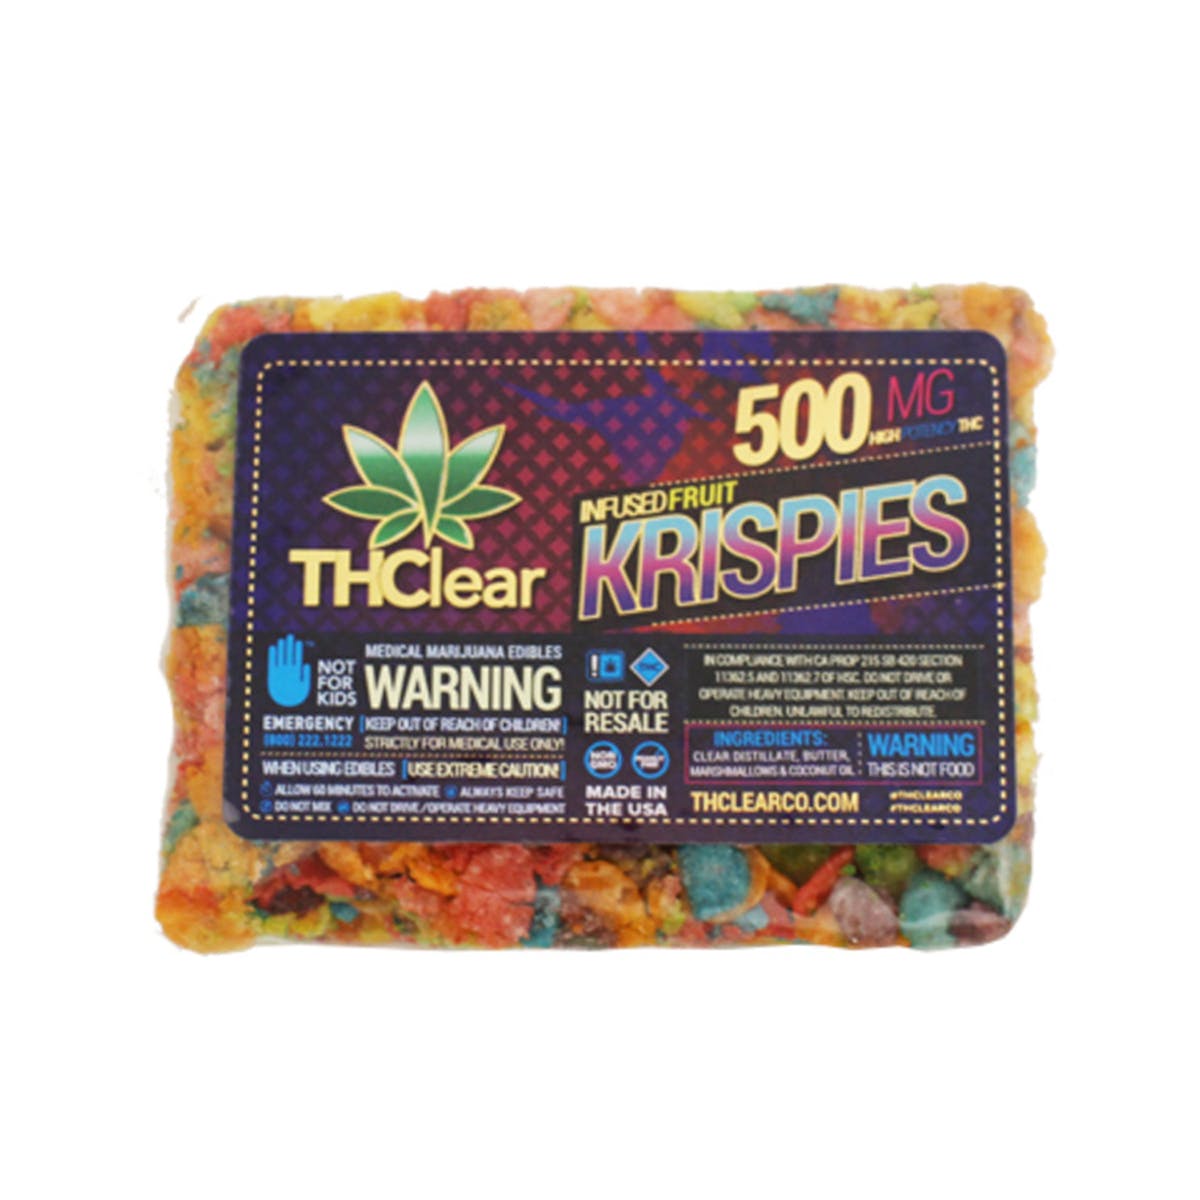 marijuana-dispensaries-puff-bar-25-cap-in-anaheim-fruit-krispies-cereal-bar-500mg